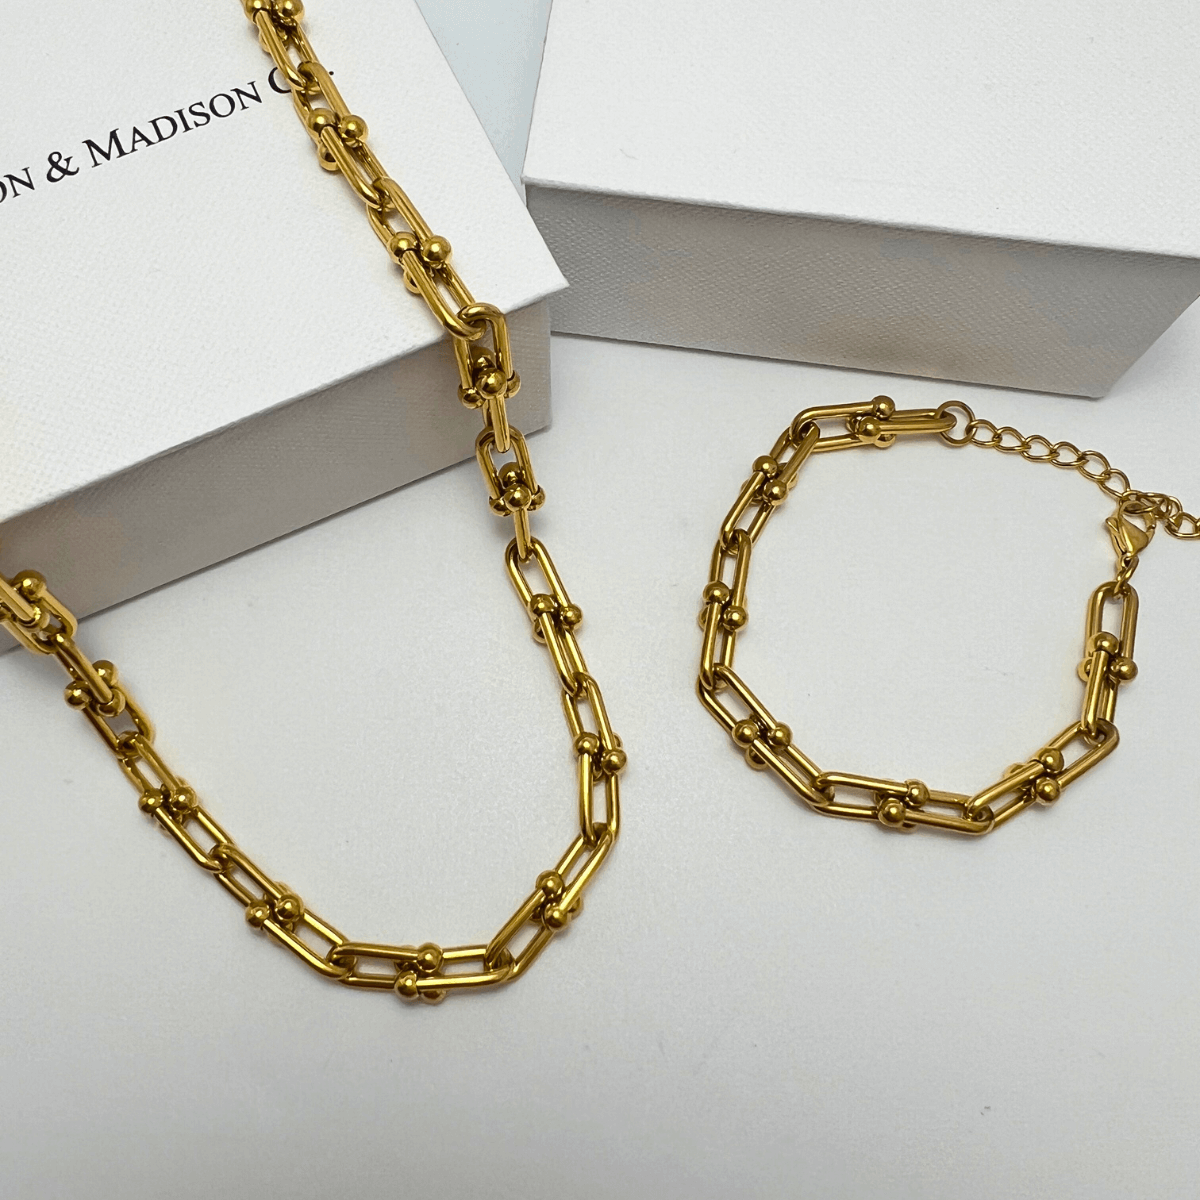 Best Gold Diamond Chain Jewelry Bundle Set Gift | Best Aesthetic Yellow Gold  Diamond Chain Necklace, Bracelet Jewelry Gift for Women, Mother, Wife |  Mason & Madison Co.